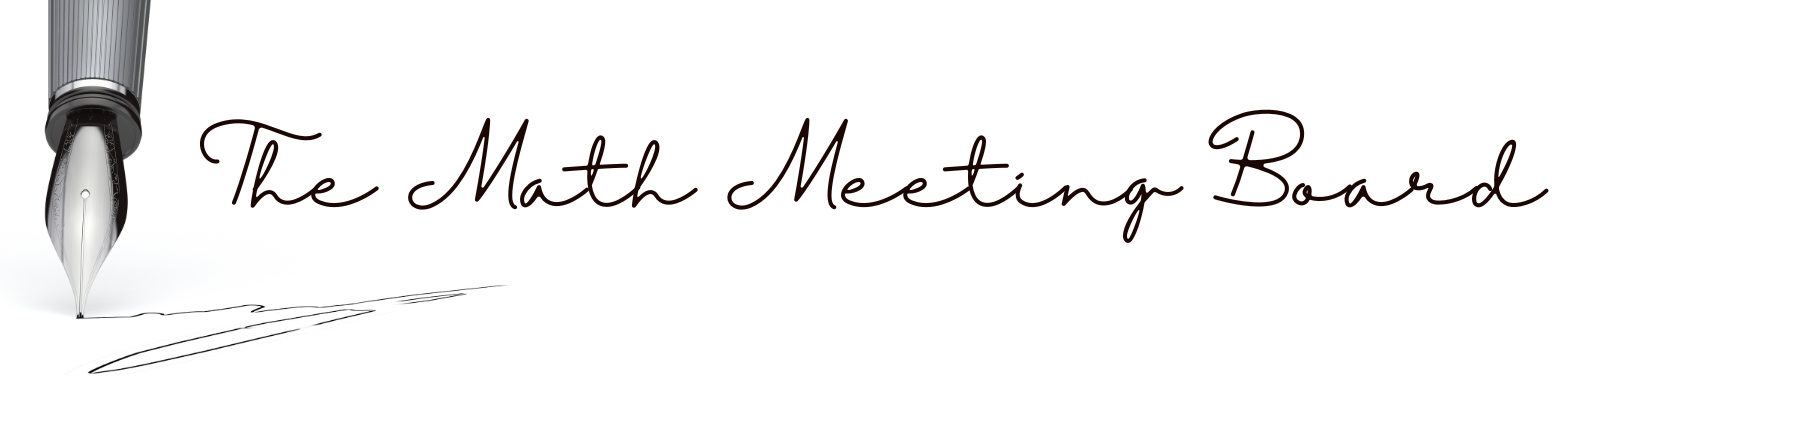 The Math Meeting Board  |  Blog Heading